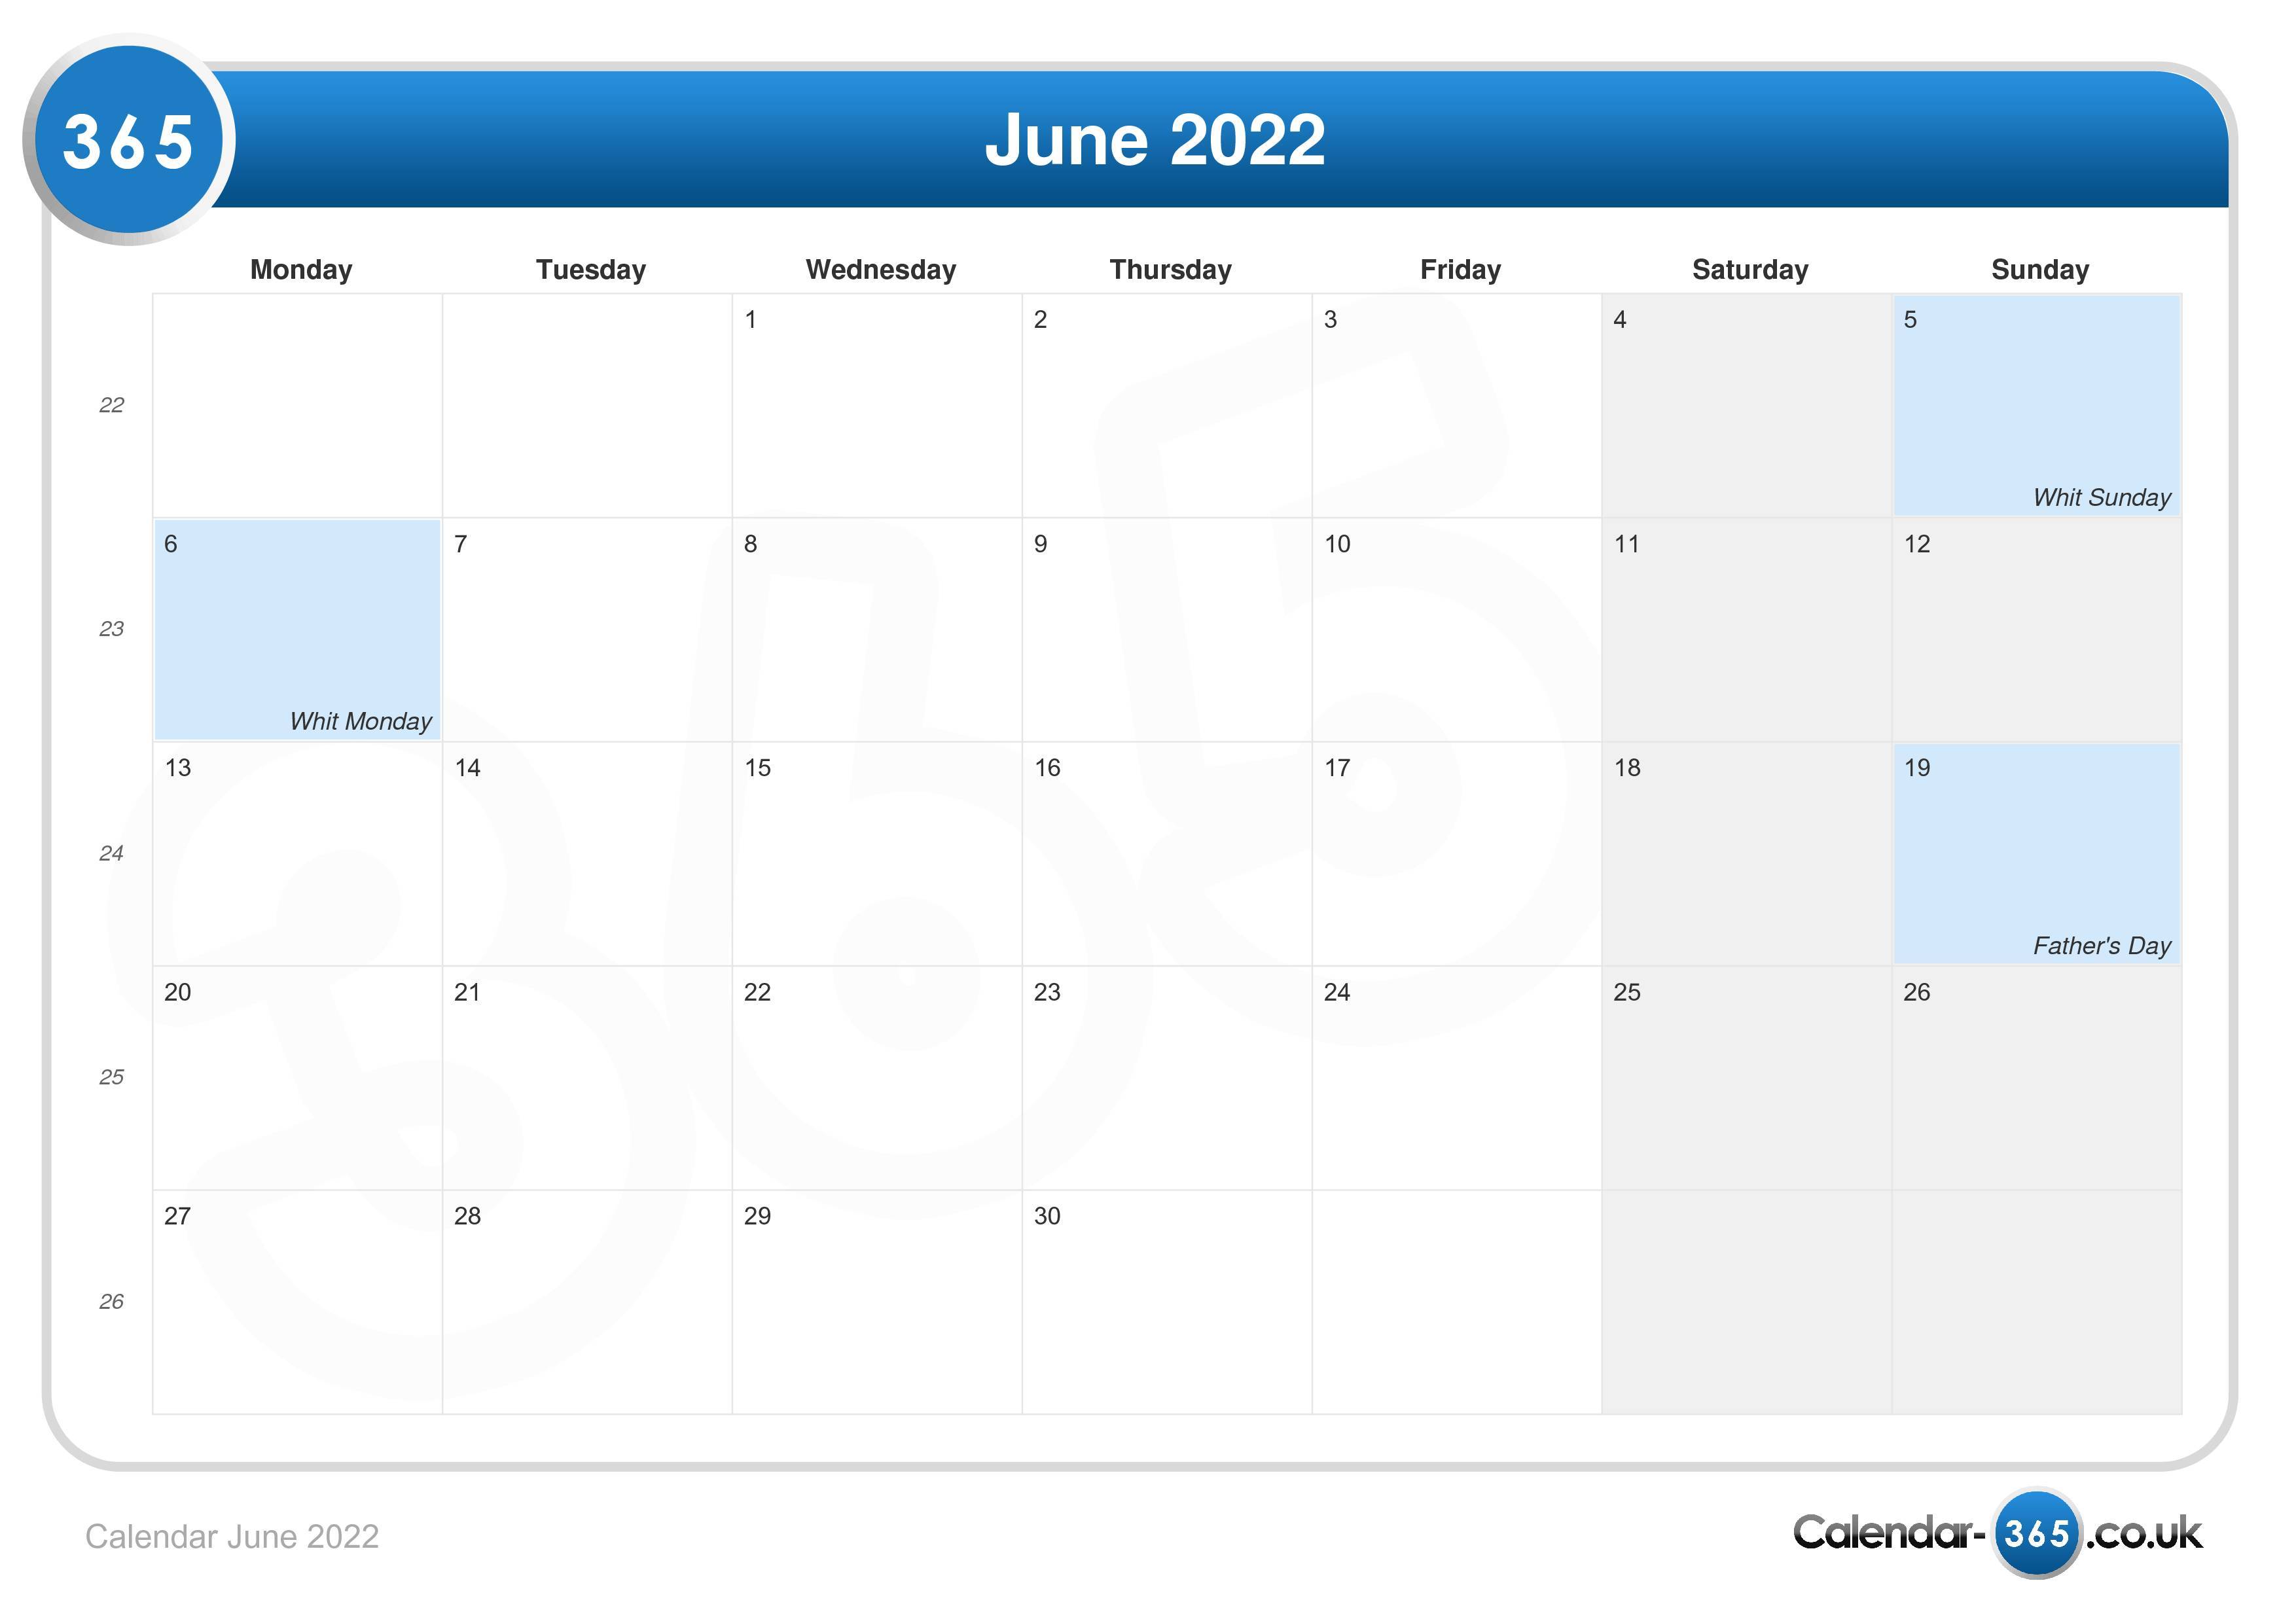 Fathers Day 2022 Calendar Calendar June 2022